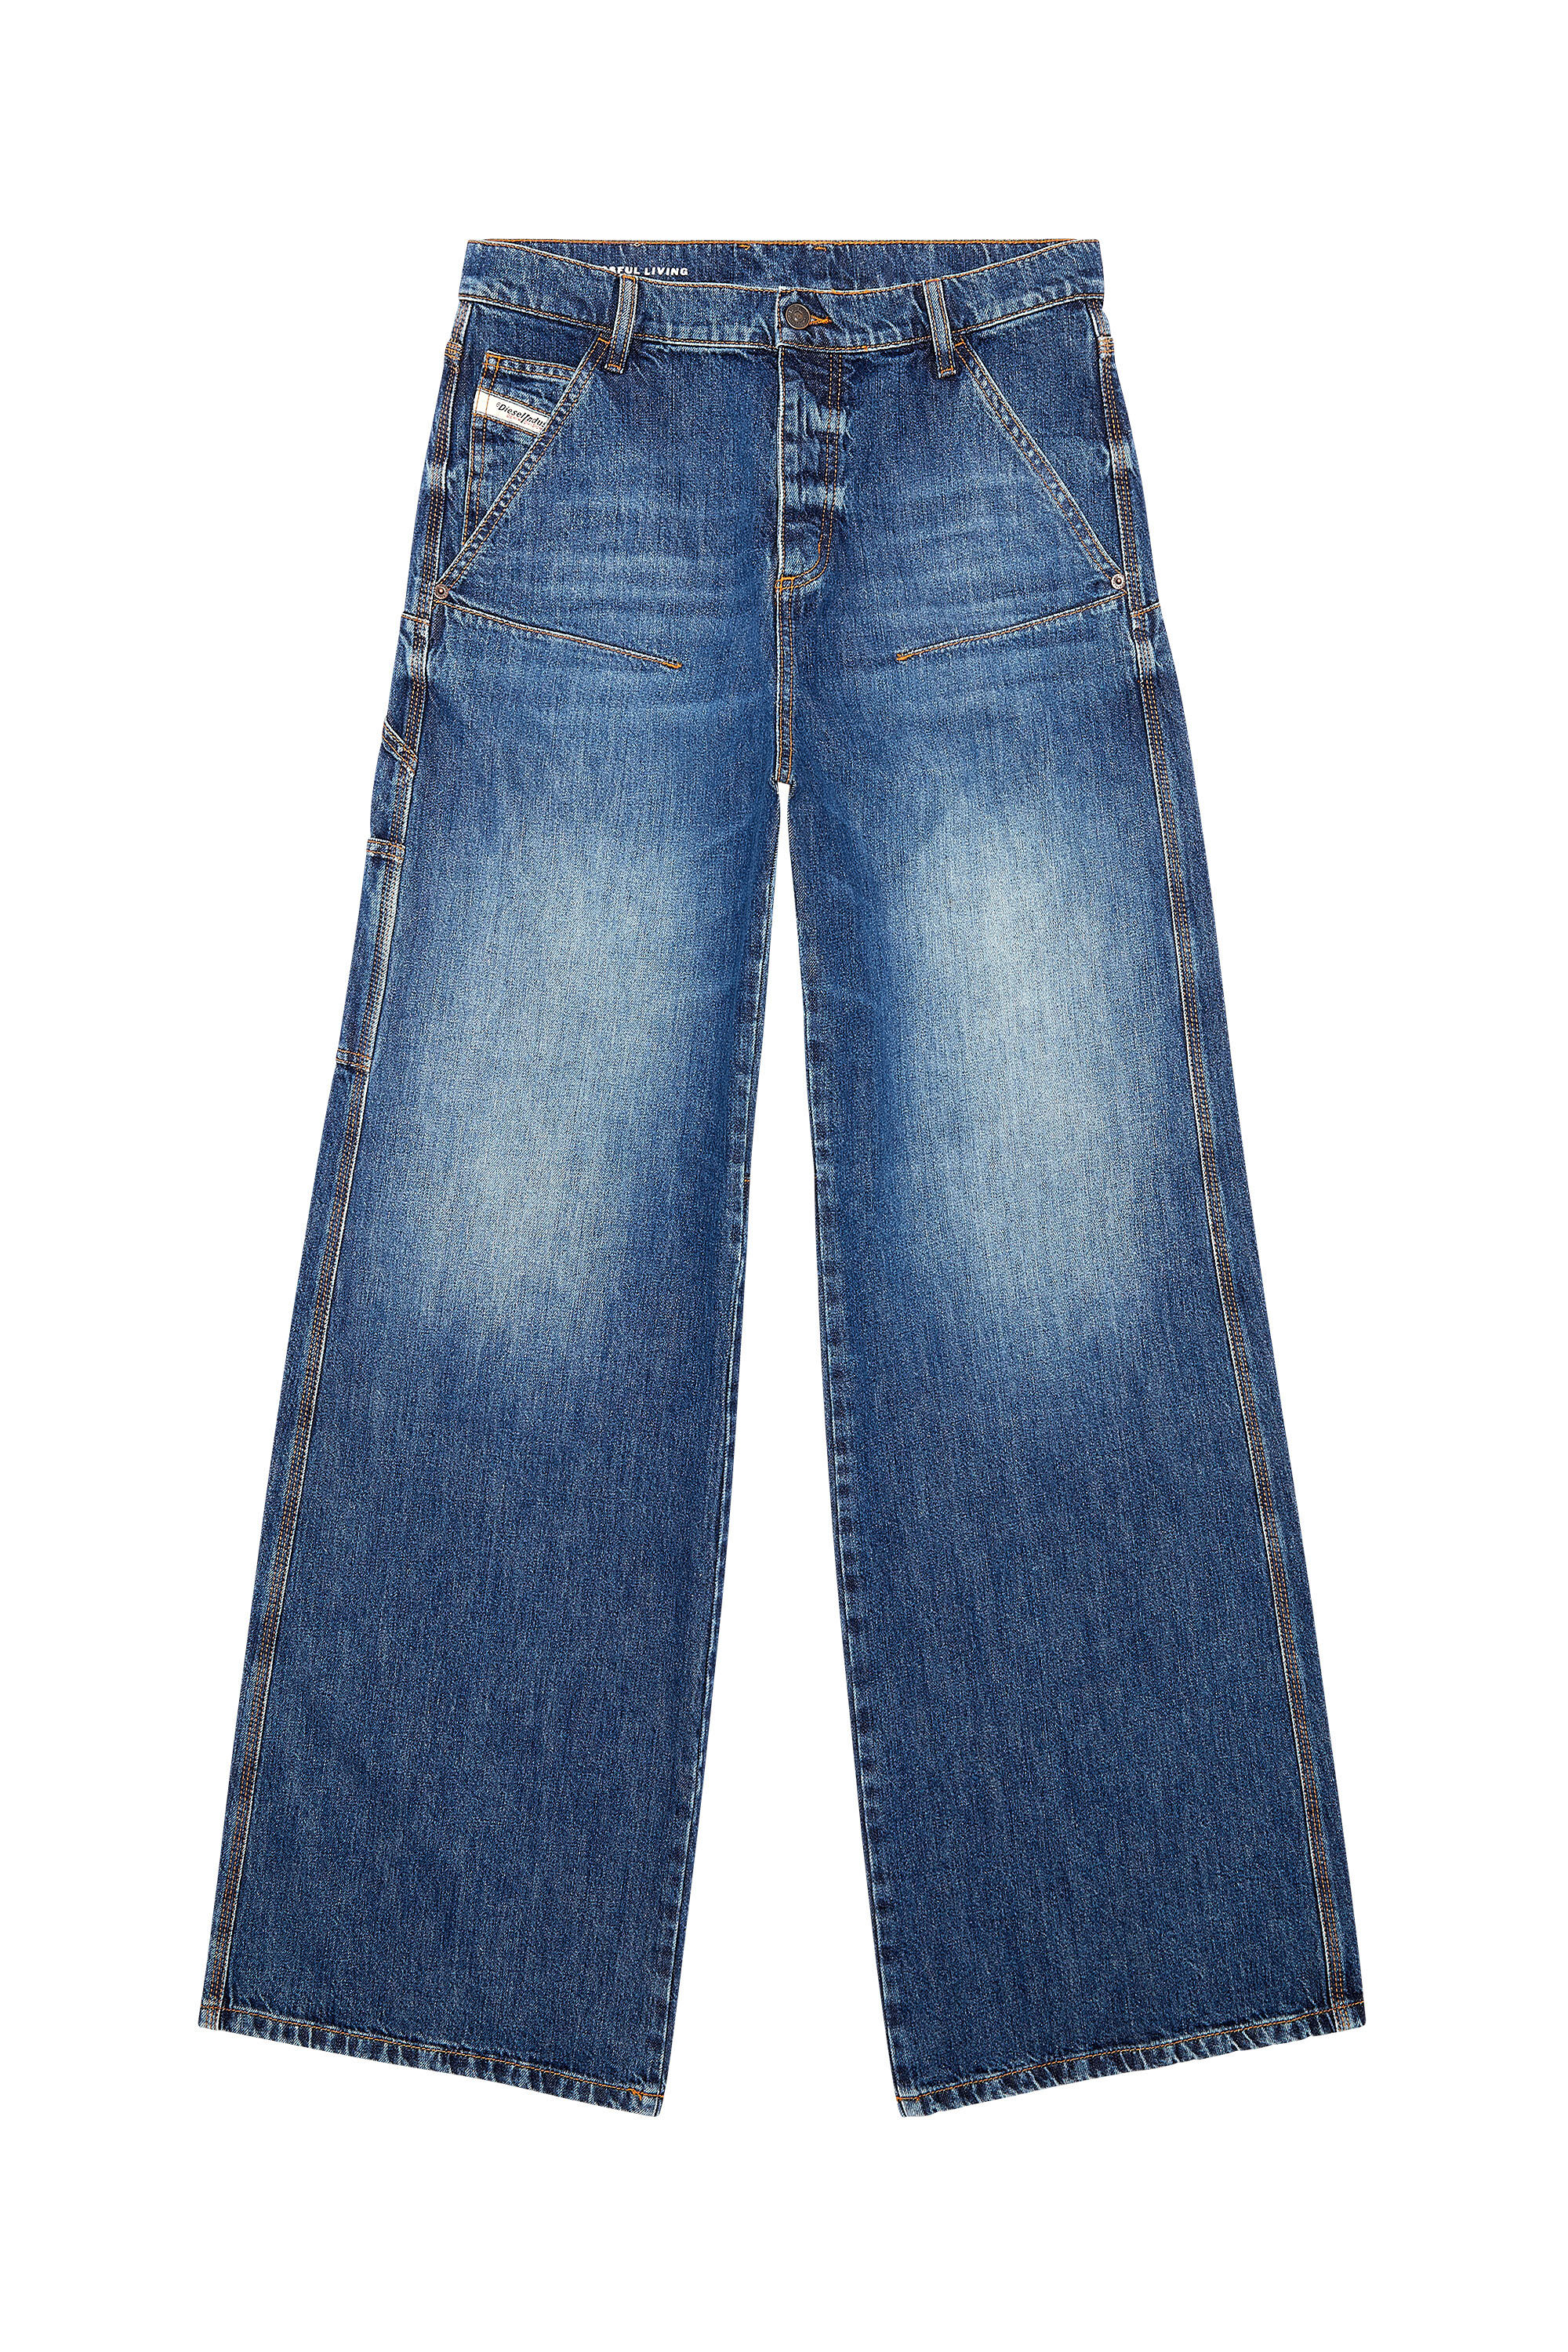 Women's Straight Jeans | Dark blue | Diesel 1996 D-Sire